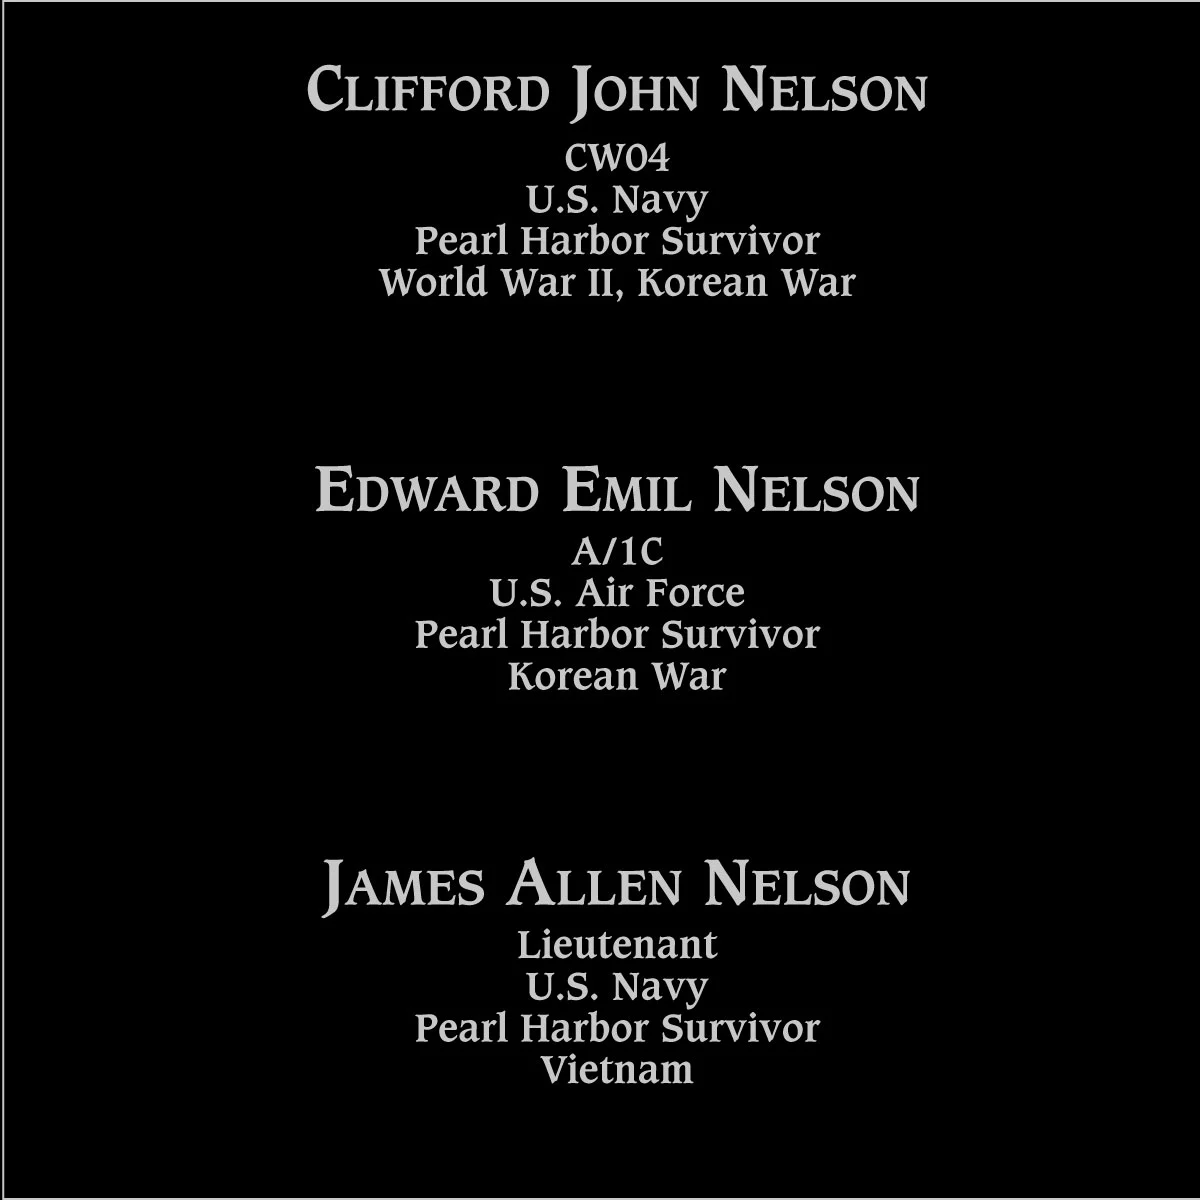 Clifford John Nelson